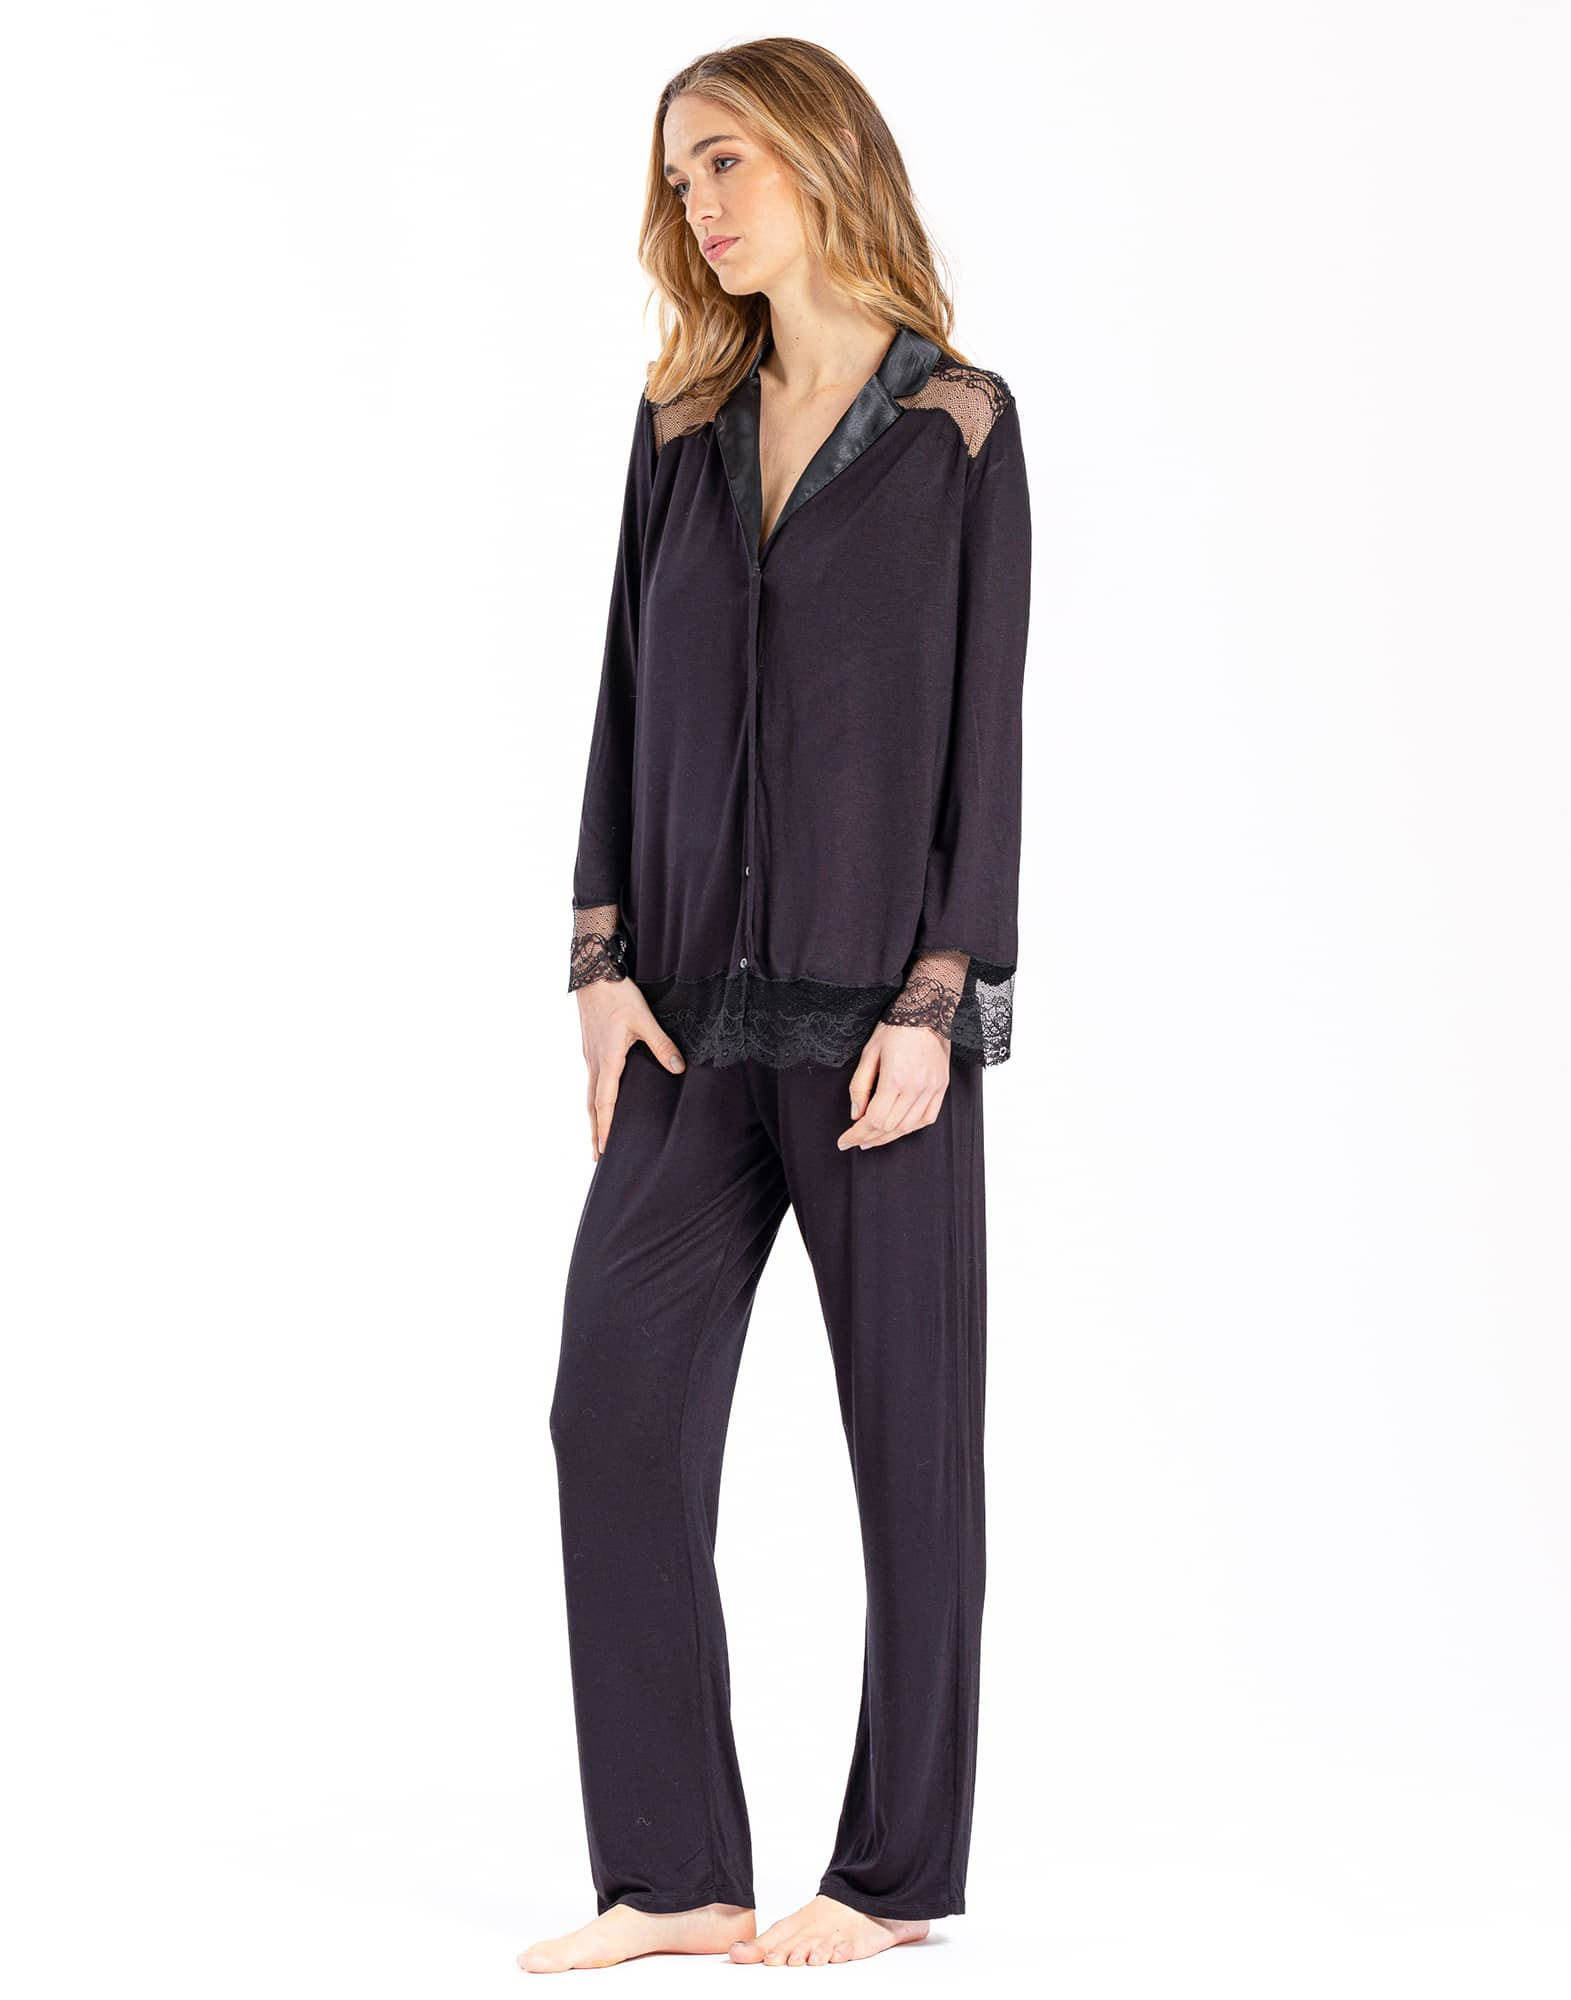 Buttoned pyjamas VIVIENNE 606 made from black viscose jacquard